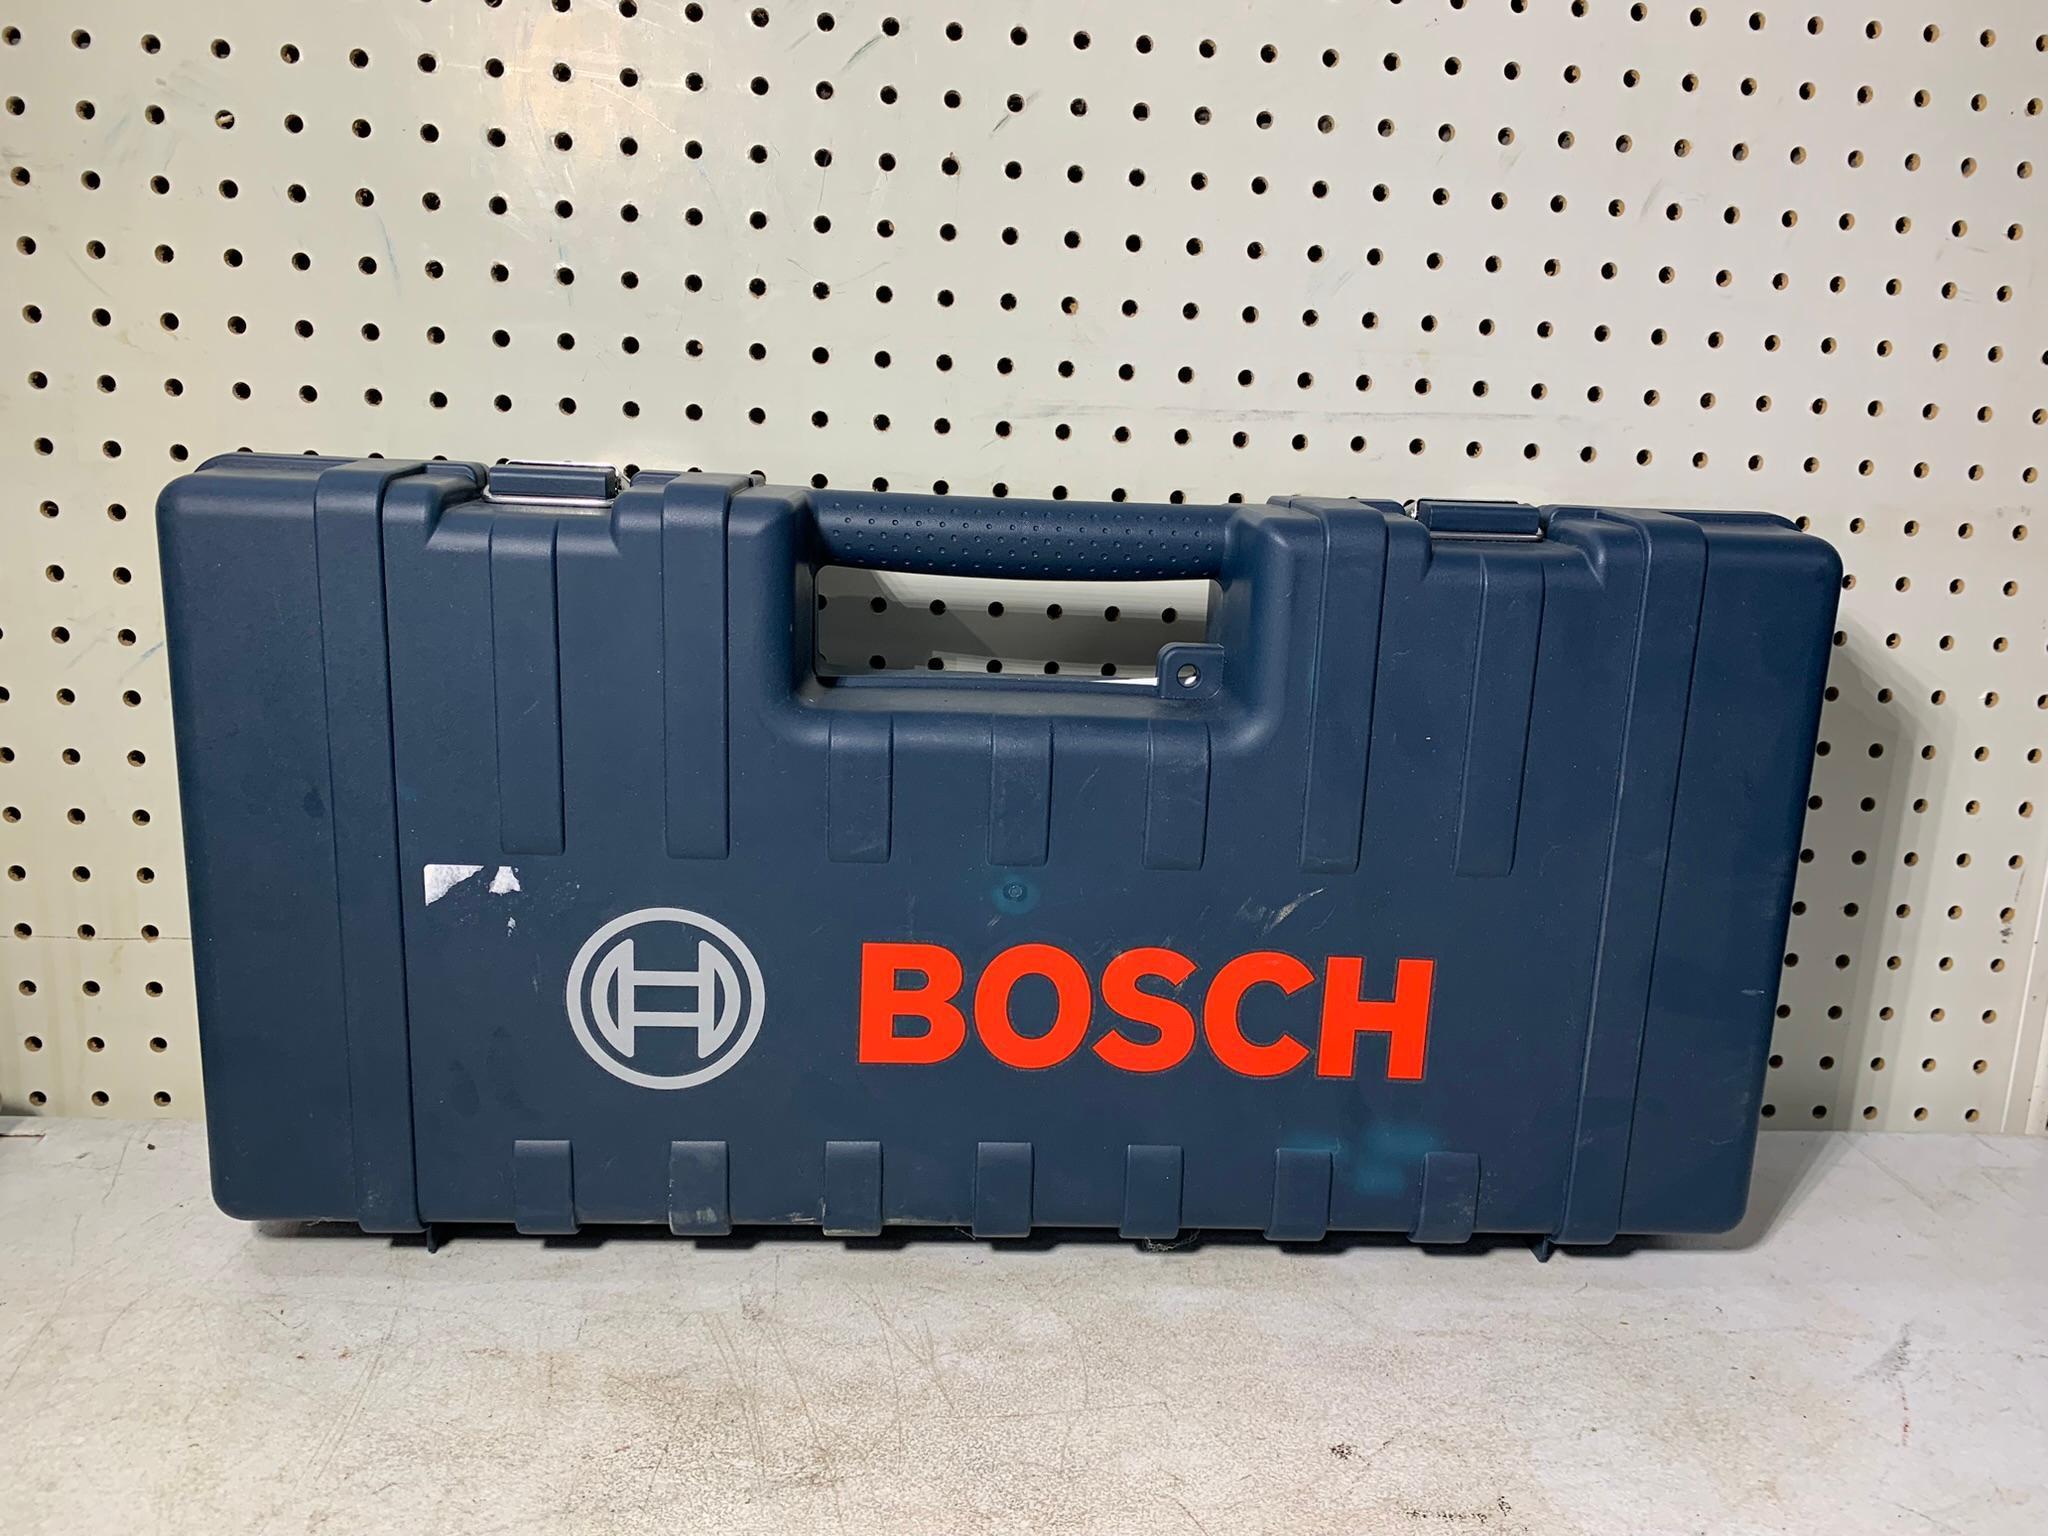 Bosch Hammer Drill with Case